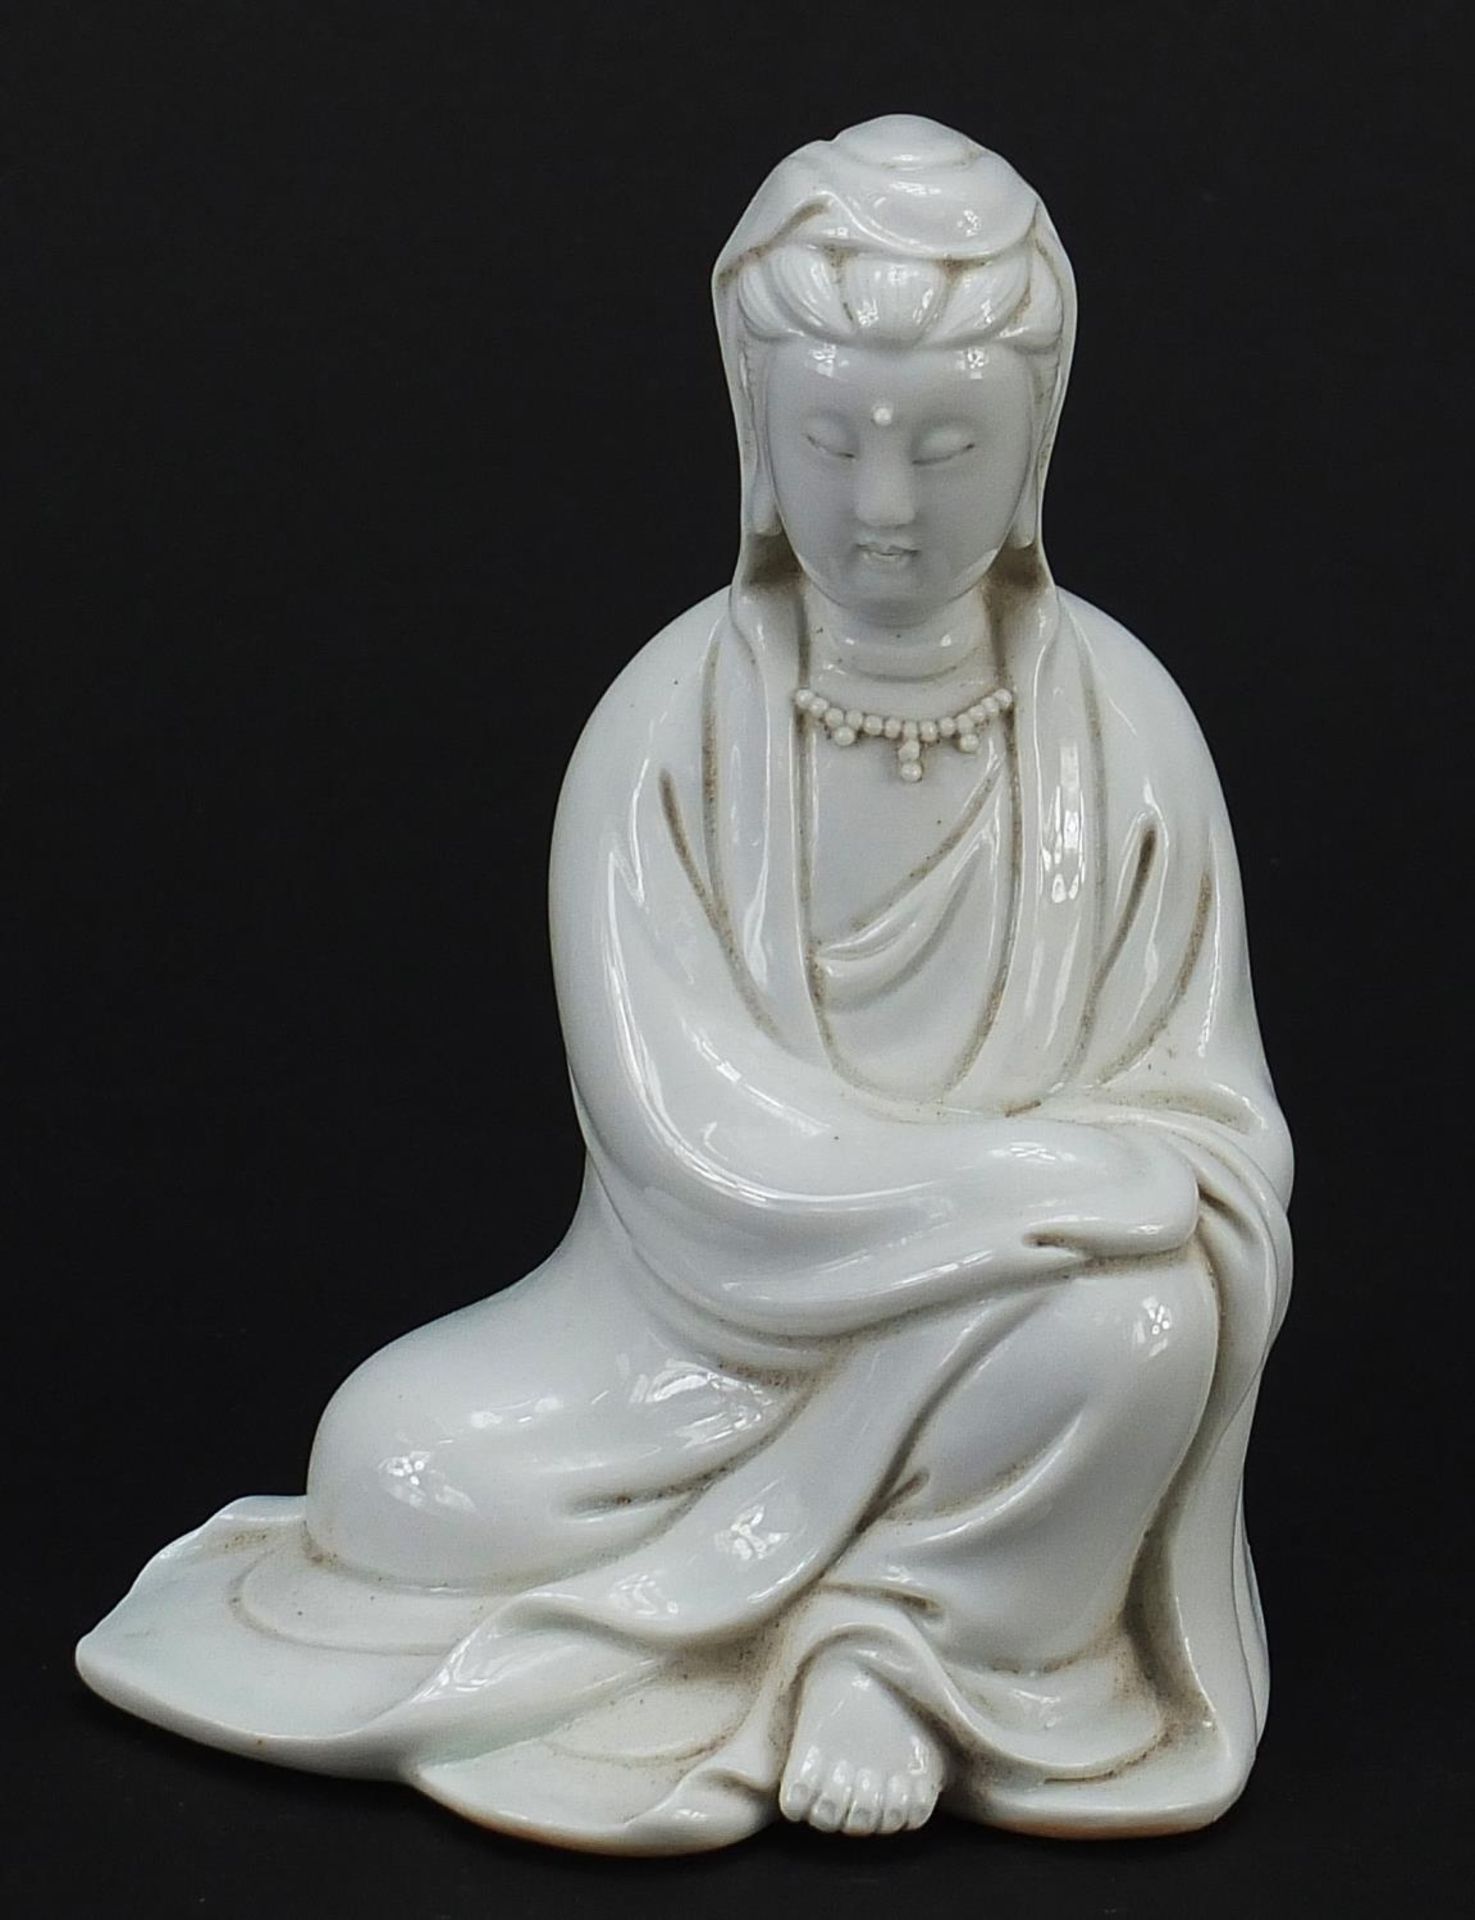 Chinese porcelain figure of Guanyin having a blanc de chine glaze, 12.5cm high